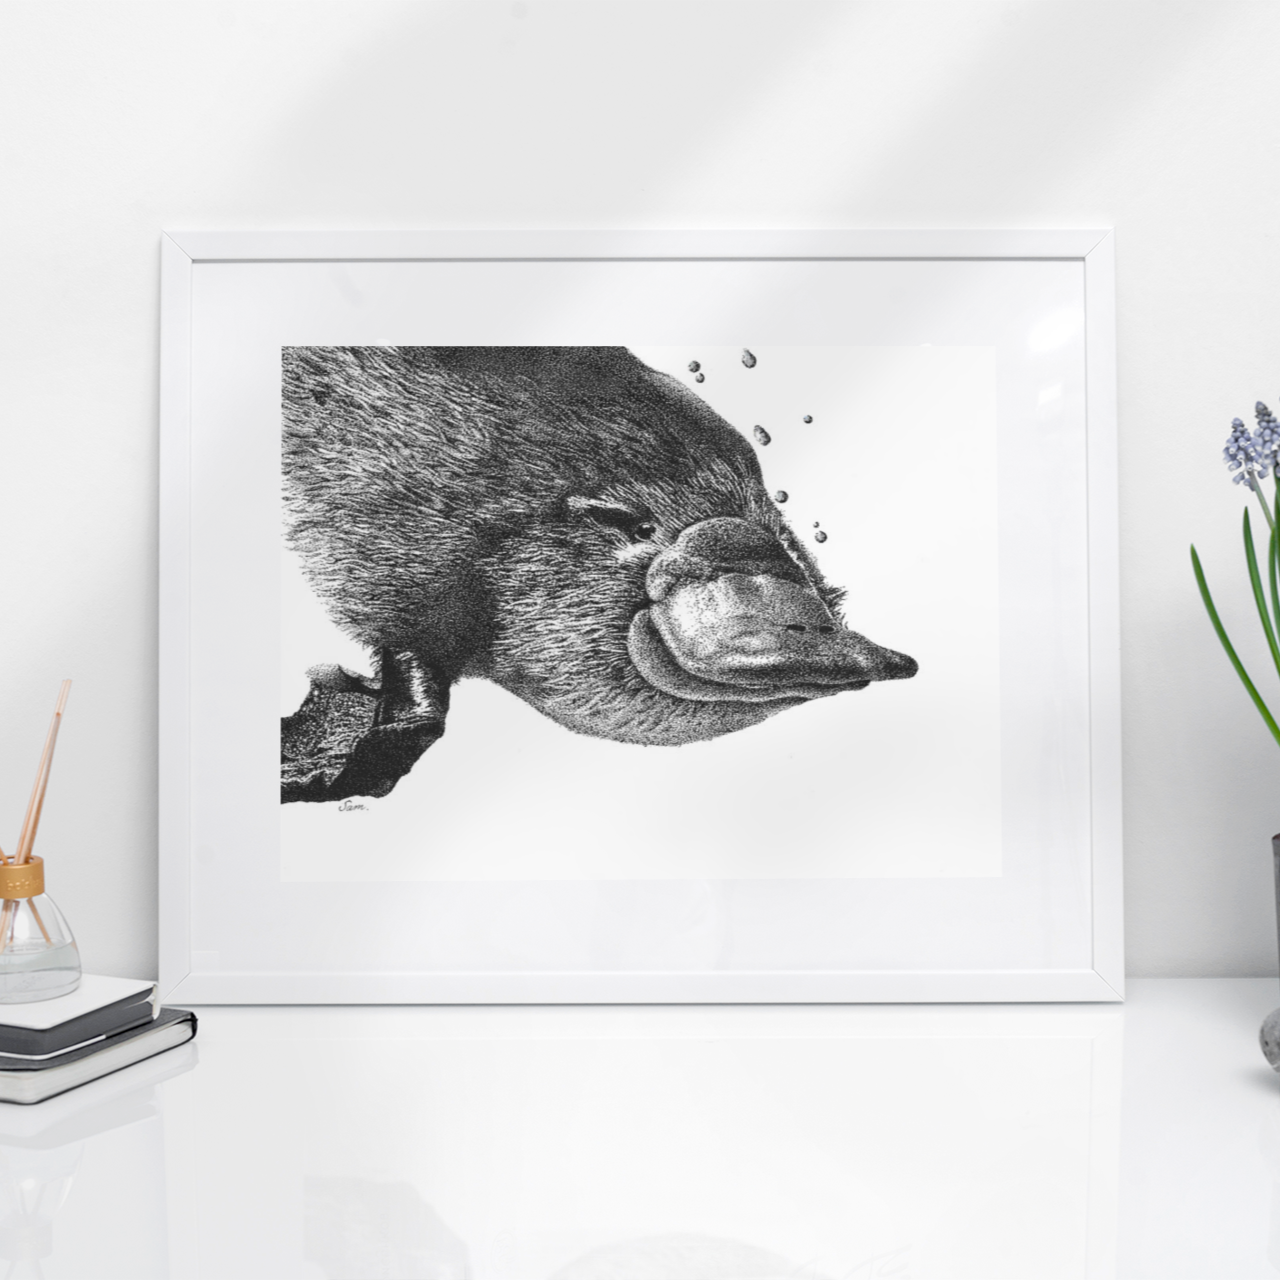 Platypus ‘Aroona’ Print